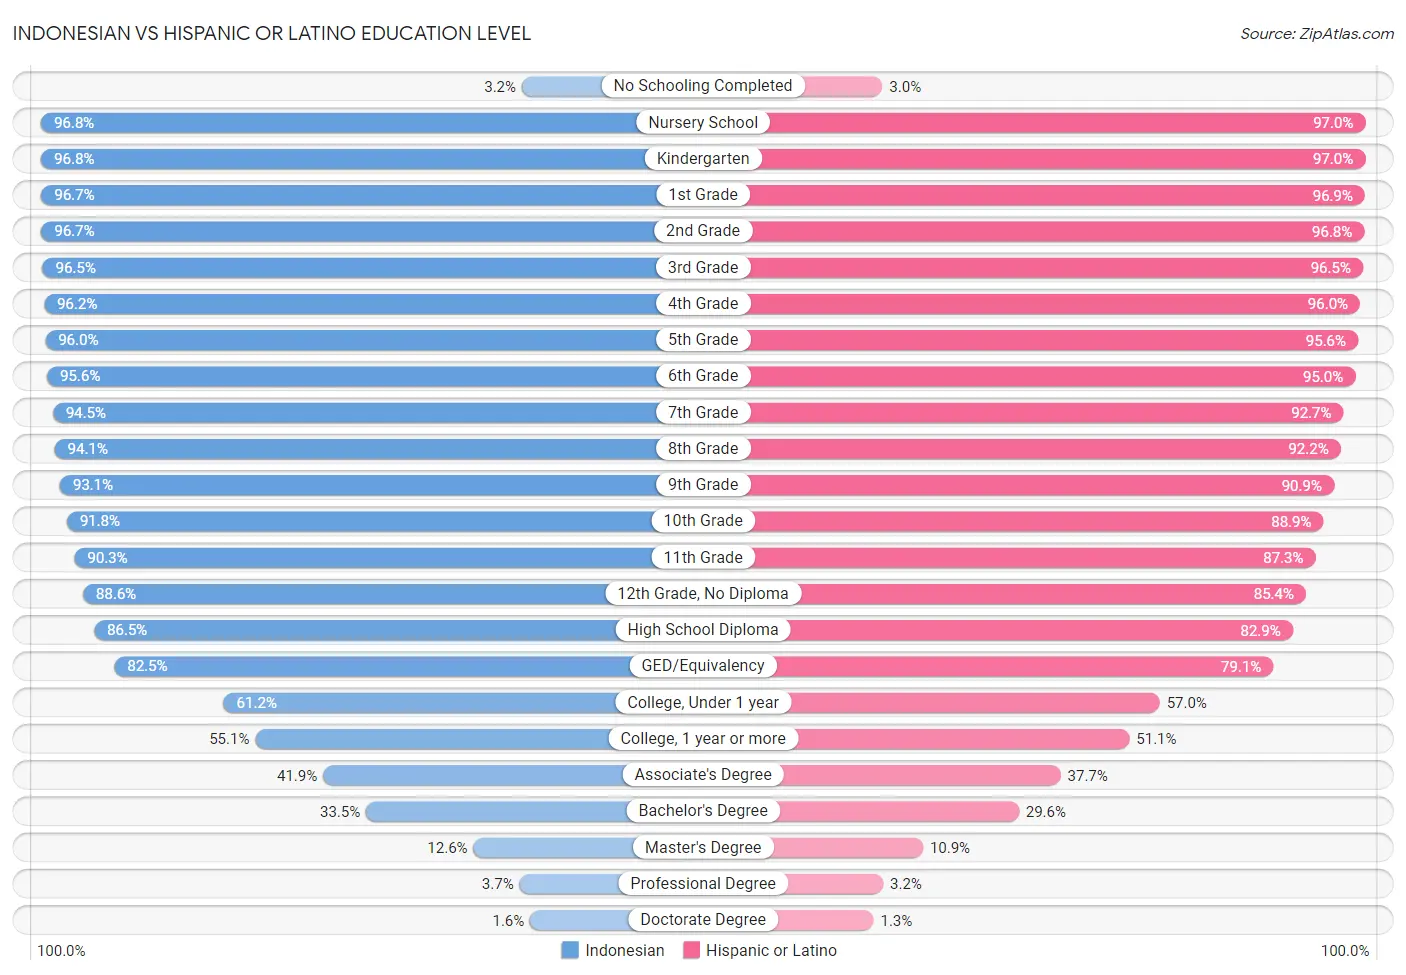 Indonesian vs Hispanic or Latino Education Level